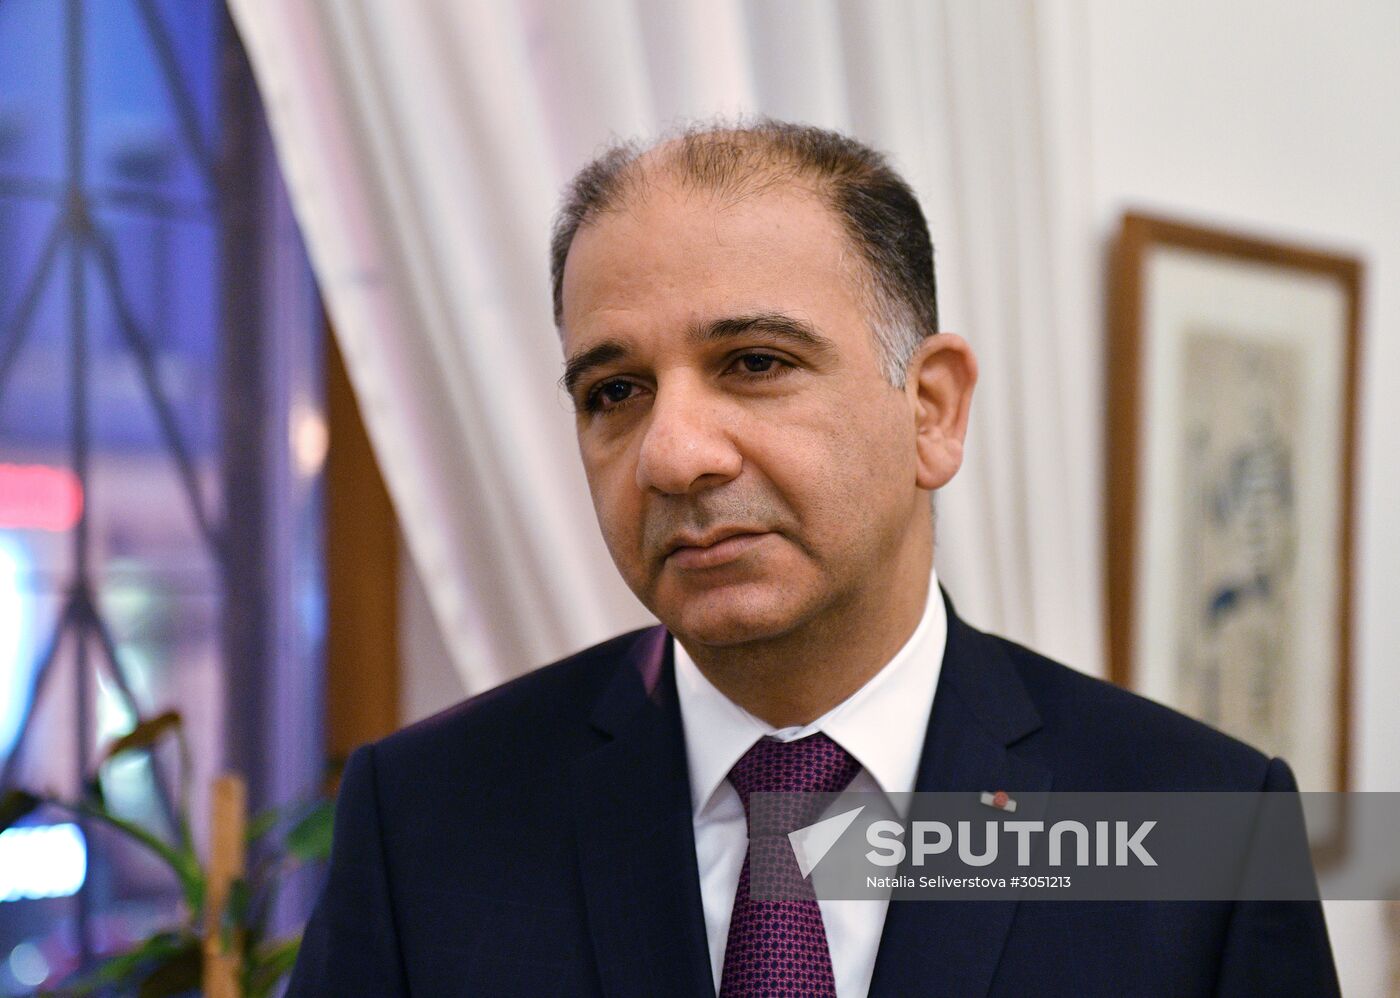 Tunisia's Ambassador to Russia Mohammed Al-Shikhi